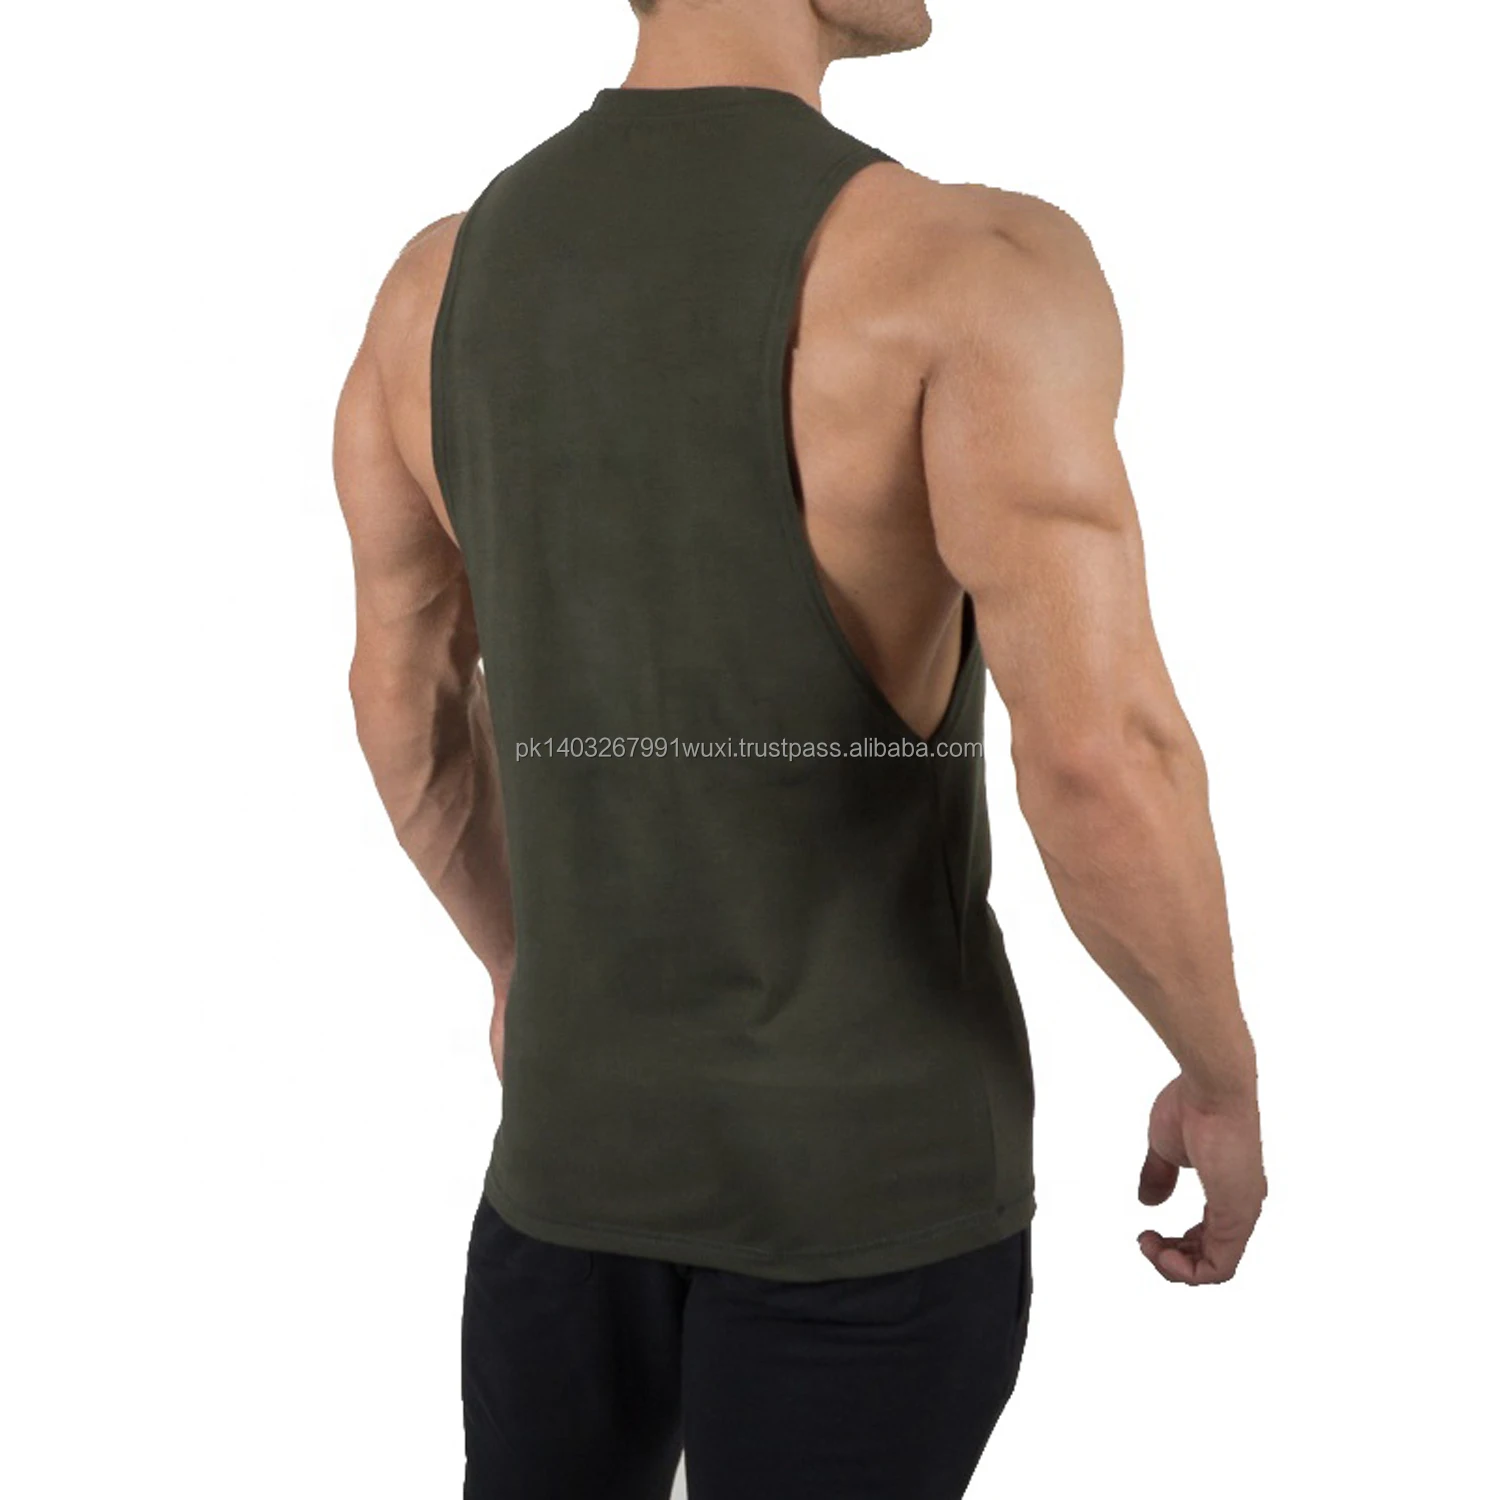 999 Me And My Desire Short Sleeve T-Shirt 34 Sleeve Baseball Raglan Tank-Top Singlet Vest Sleeveless Tote Bag